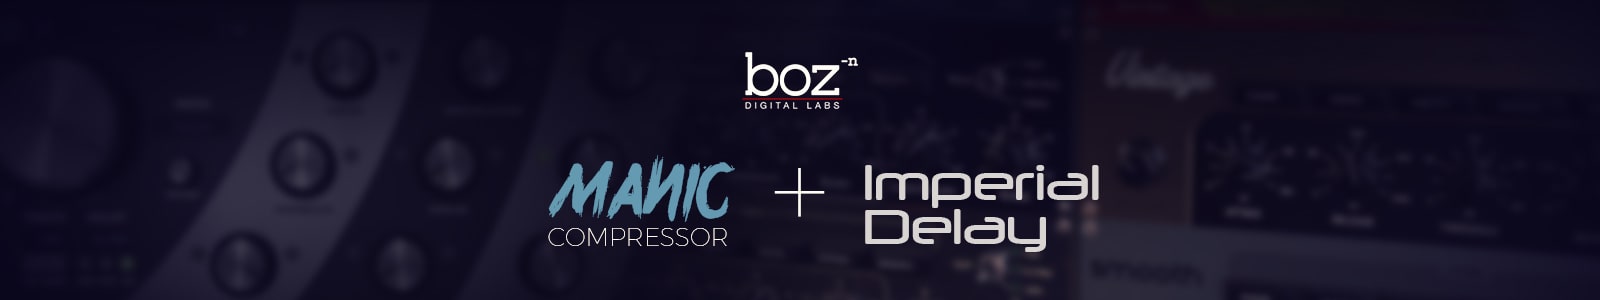 Manic Compressor + Imperial Delay by Boz Digital Labs